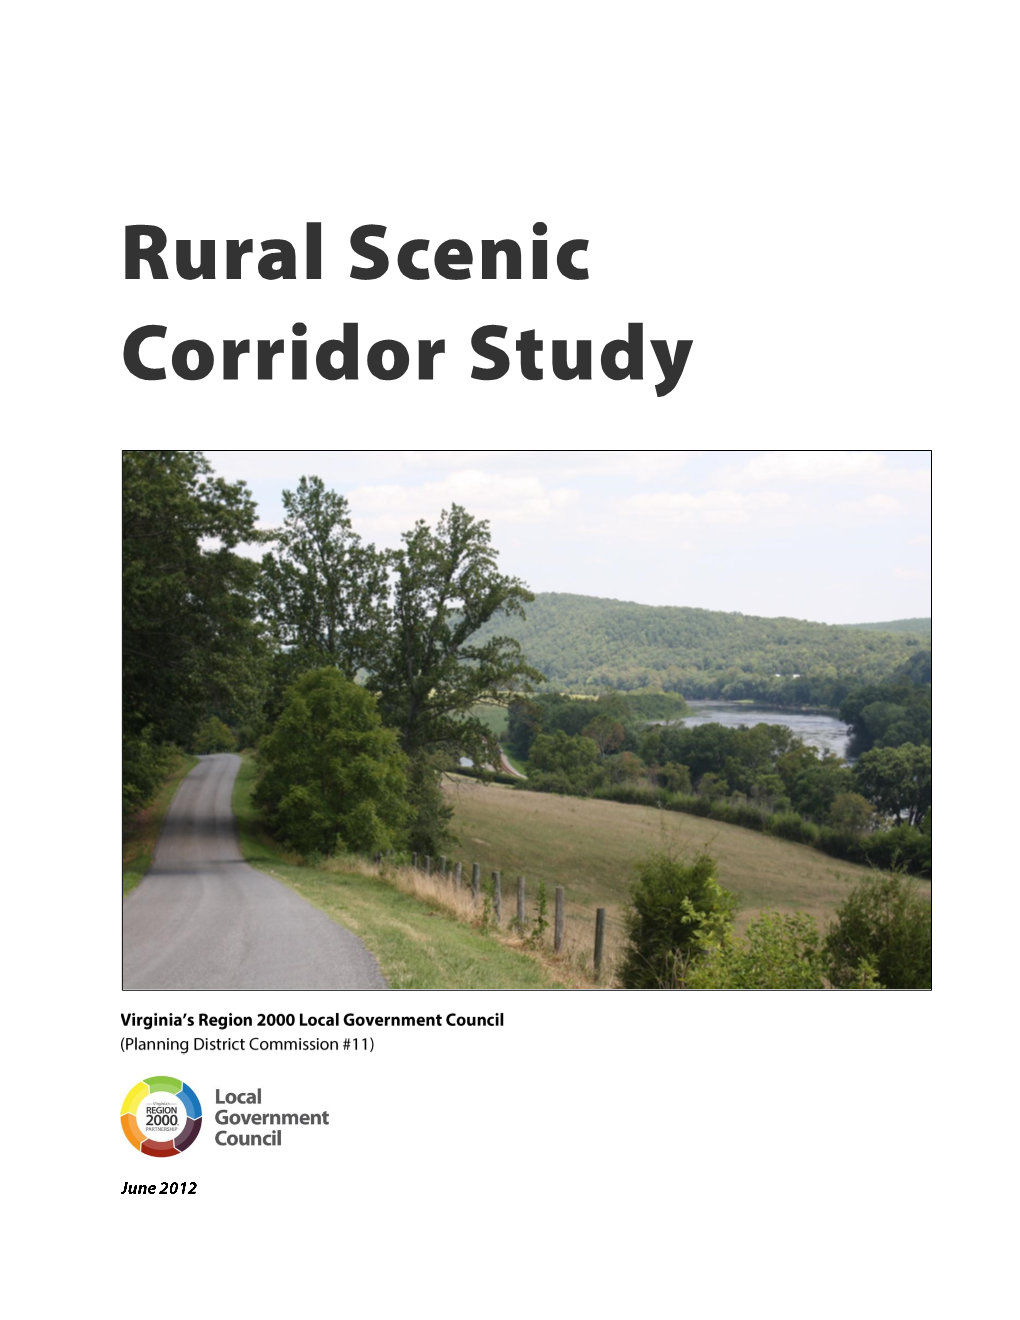 Rural Scenic Corridor Study